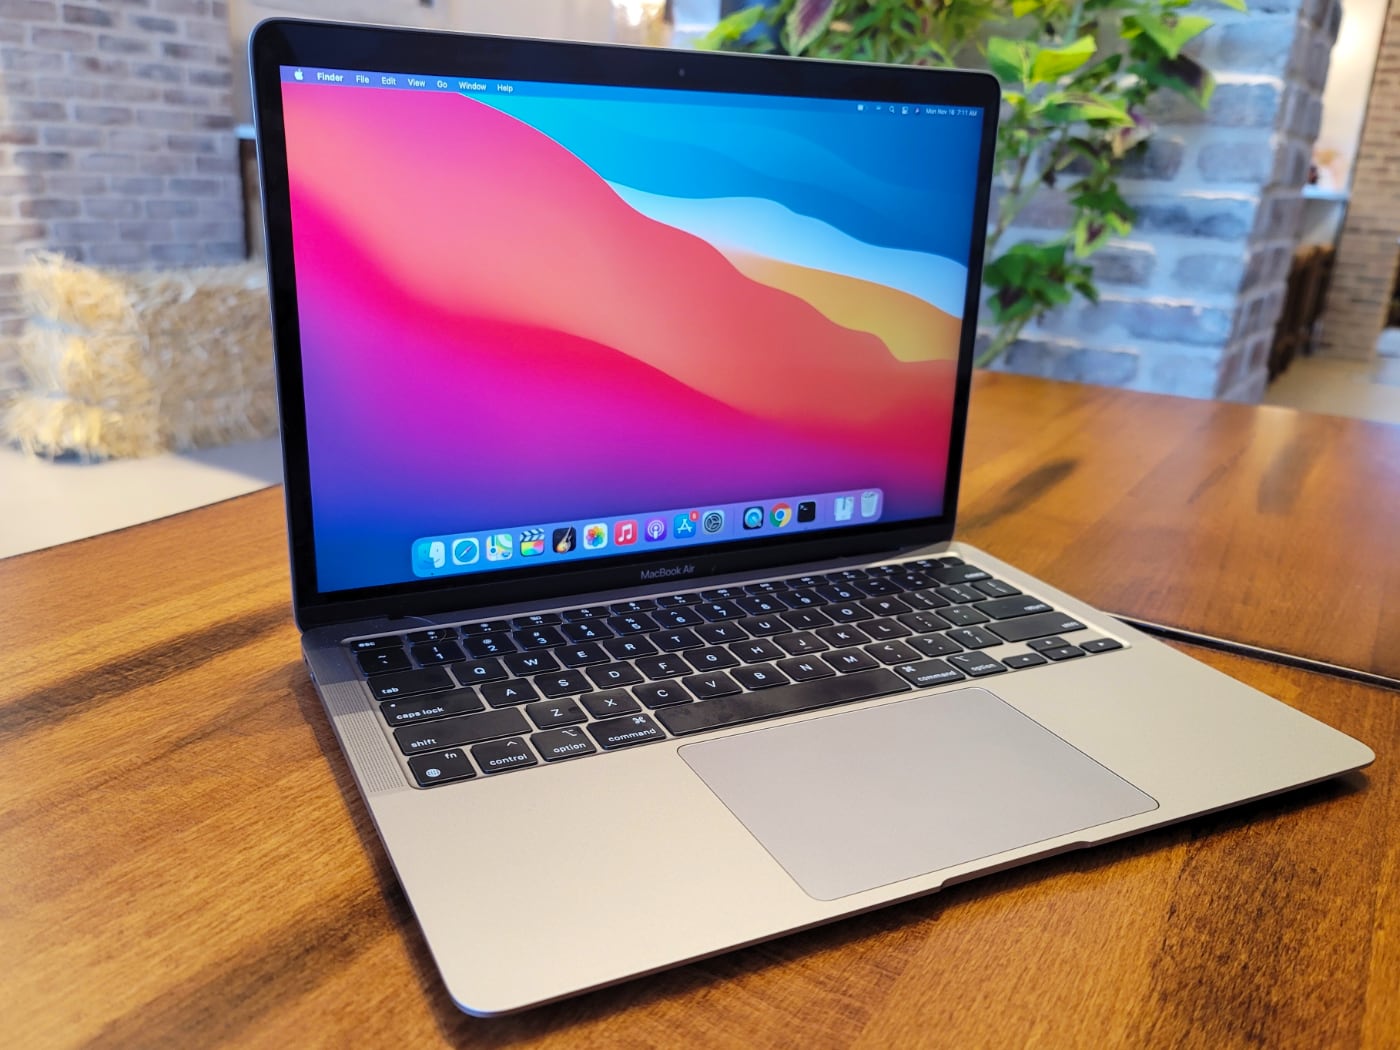 Cnet reviews 2018 apple macbook pro apple macbook error kernel gpu panic